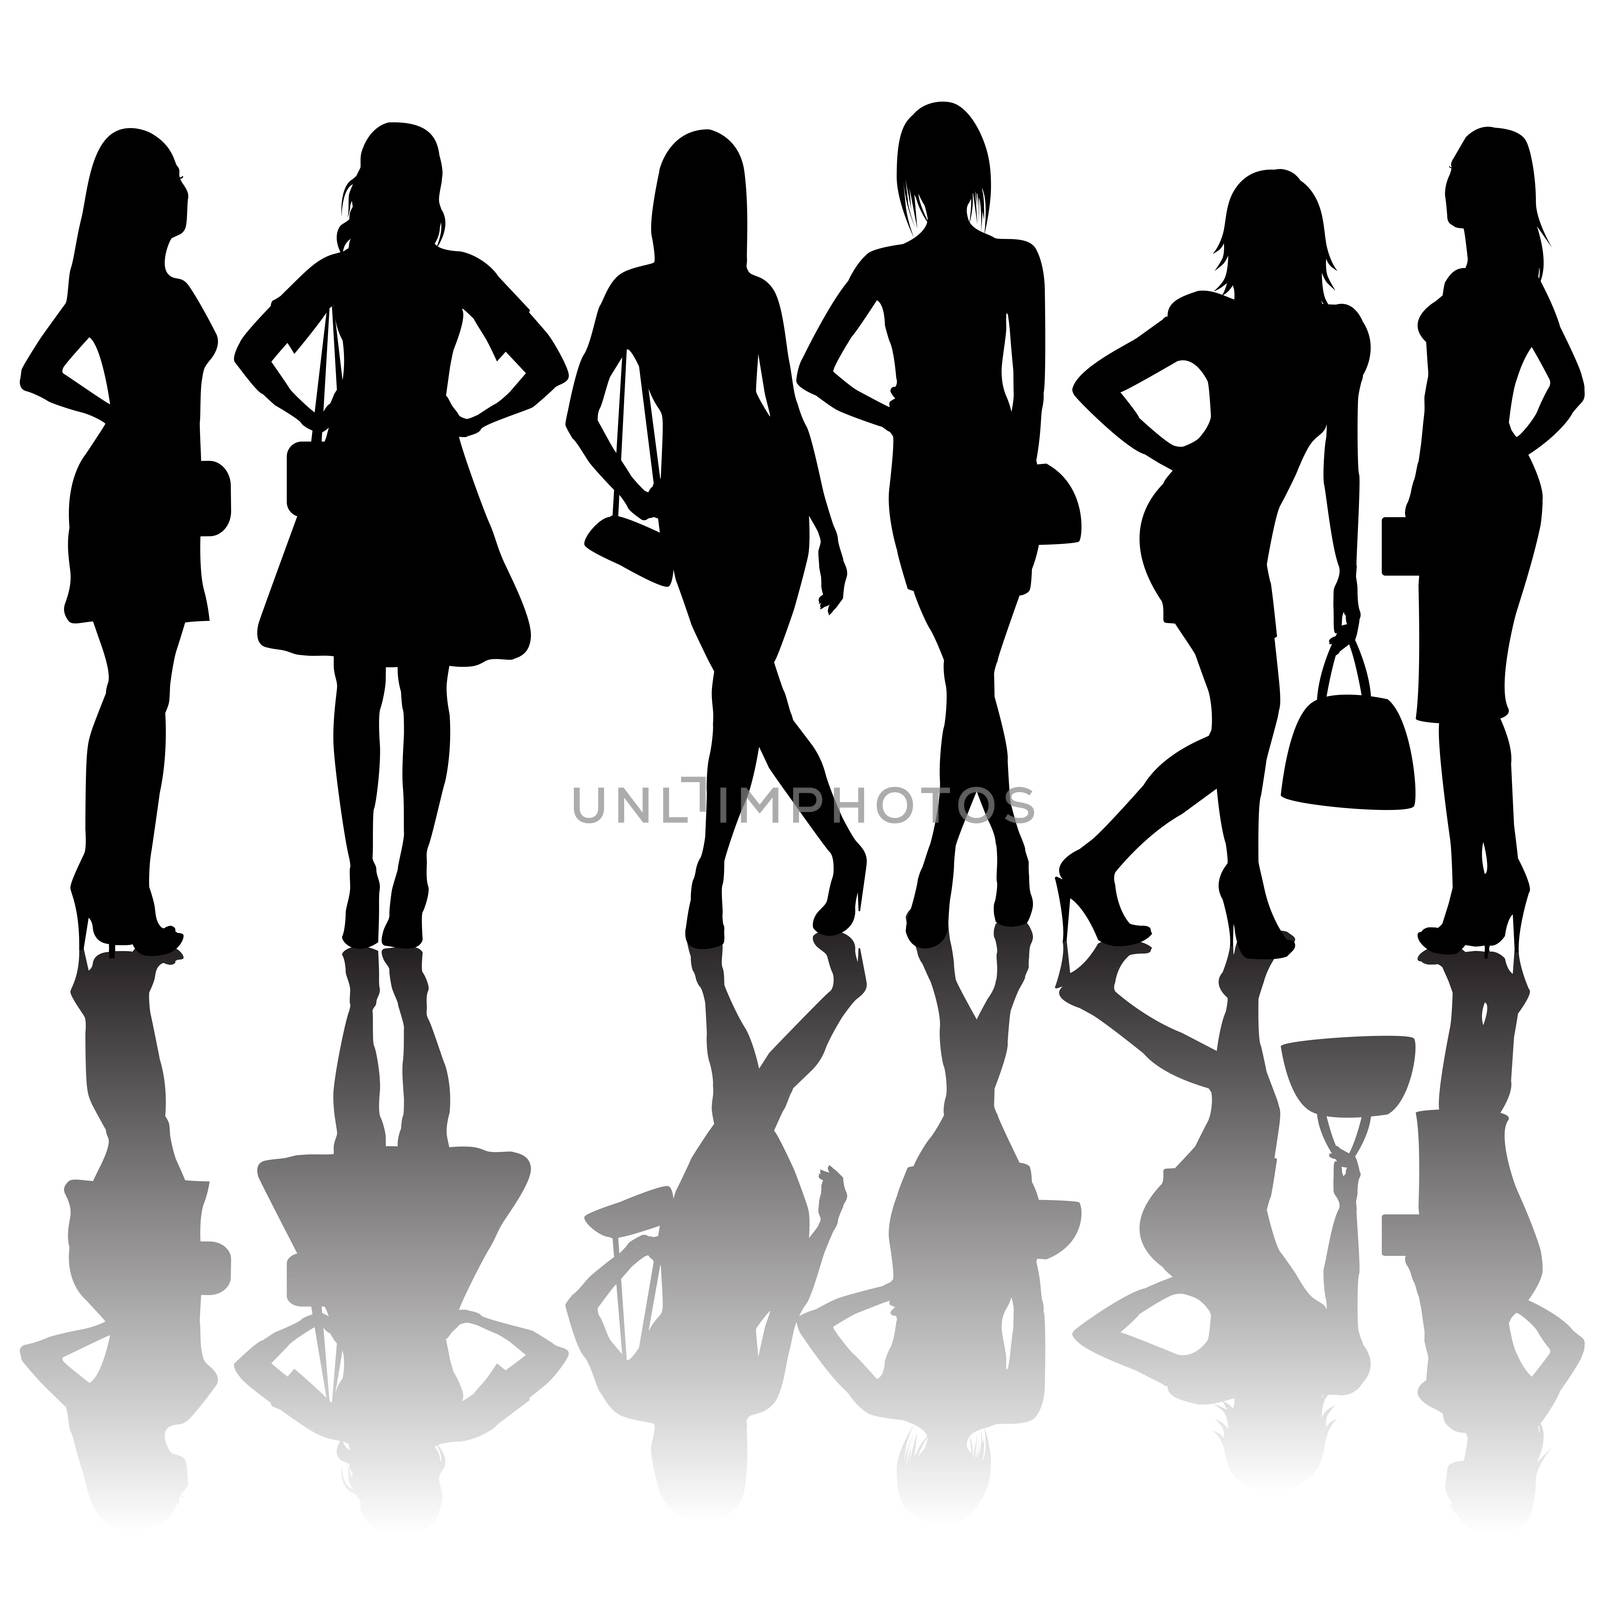 Fashion silhouettes of women by hibrida13